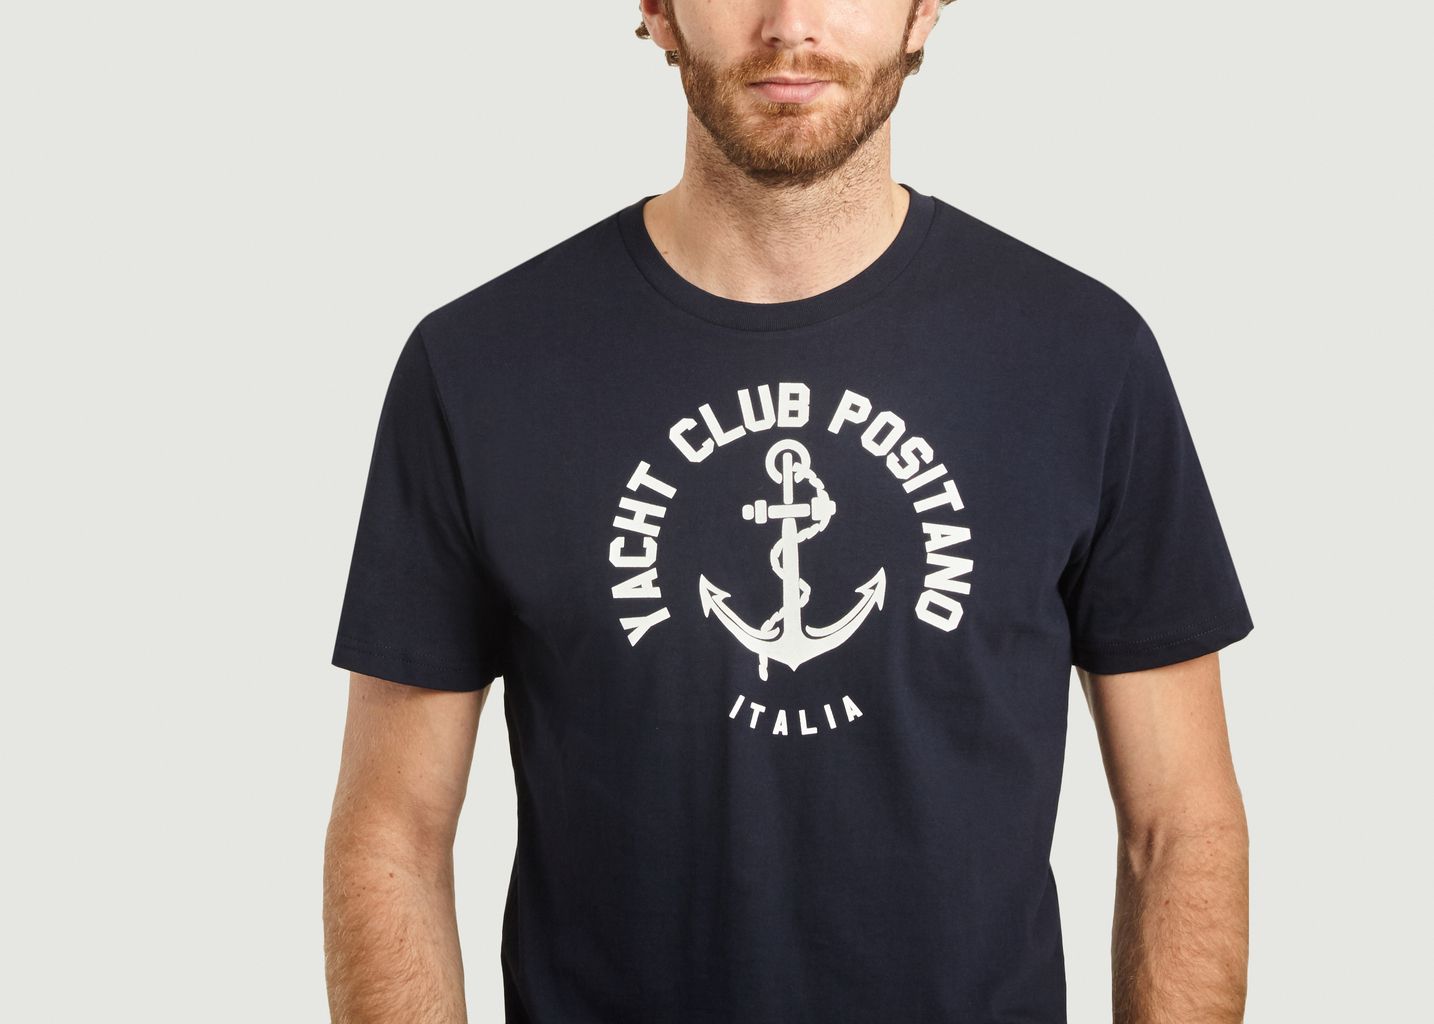 Yacht Club Positano Italia printed t-shirt - Harmony